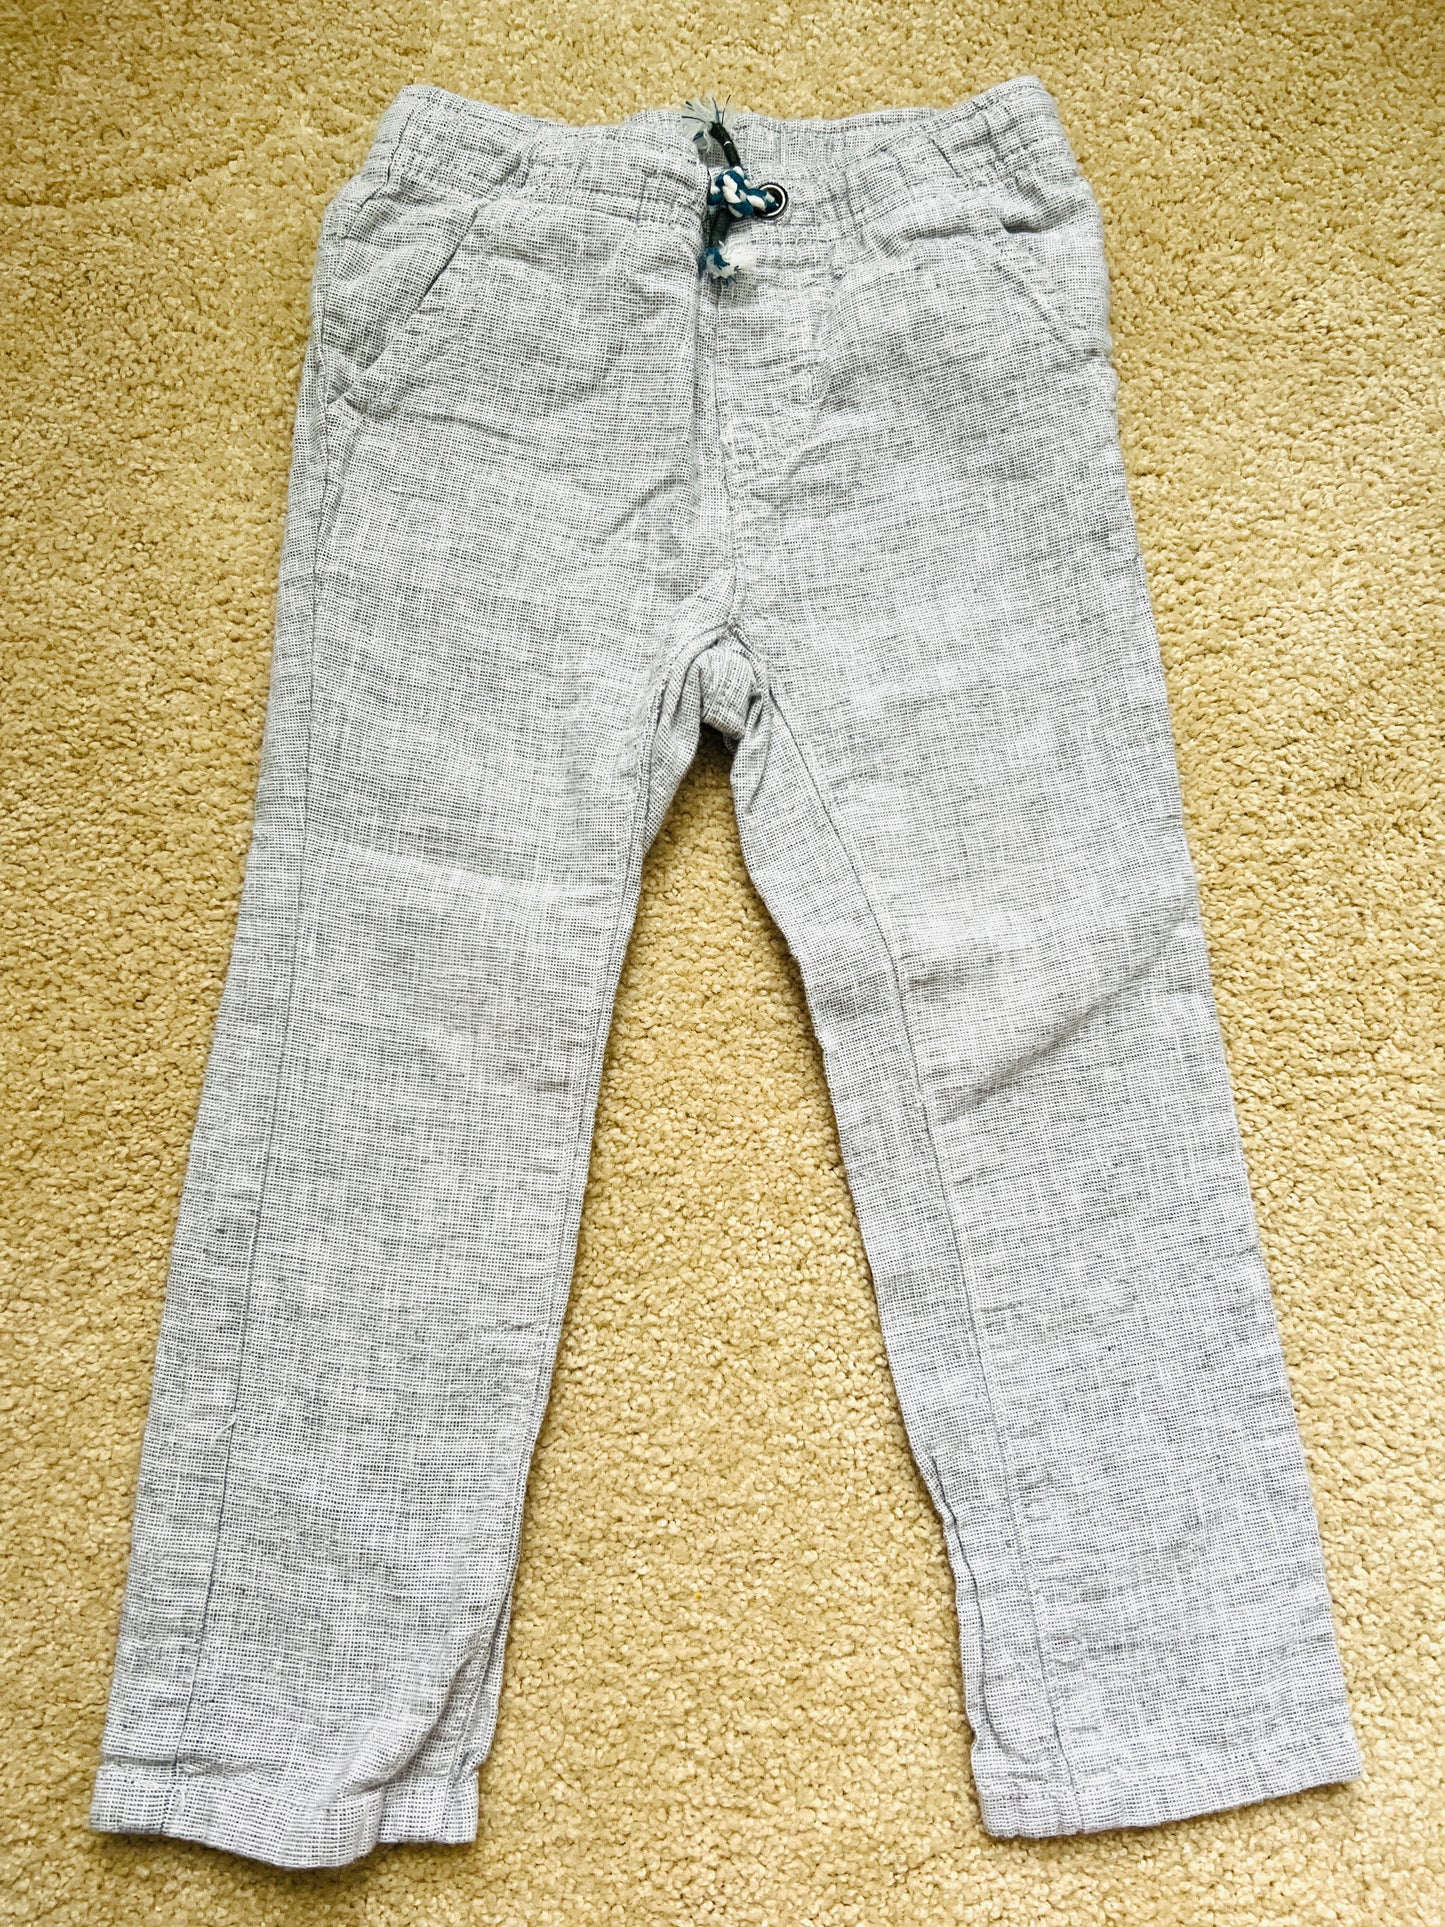 Cat & Jack linen pants, 2T, GUC